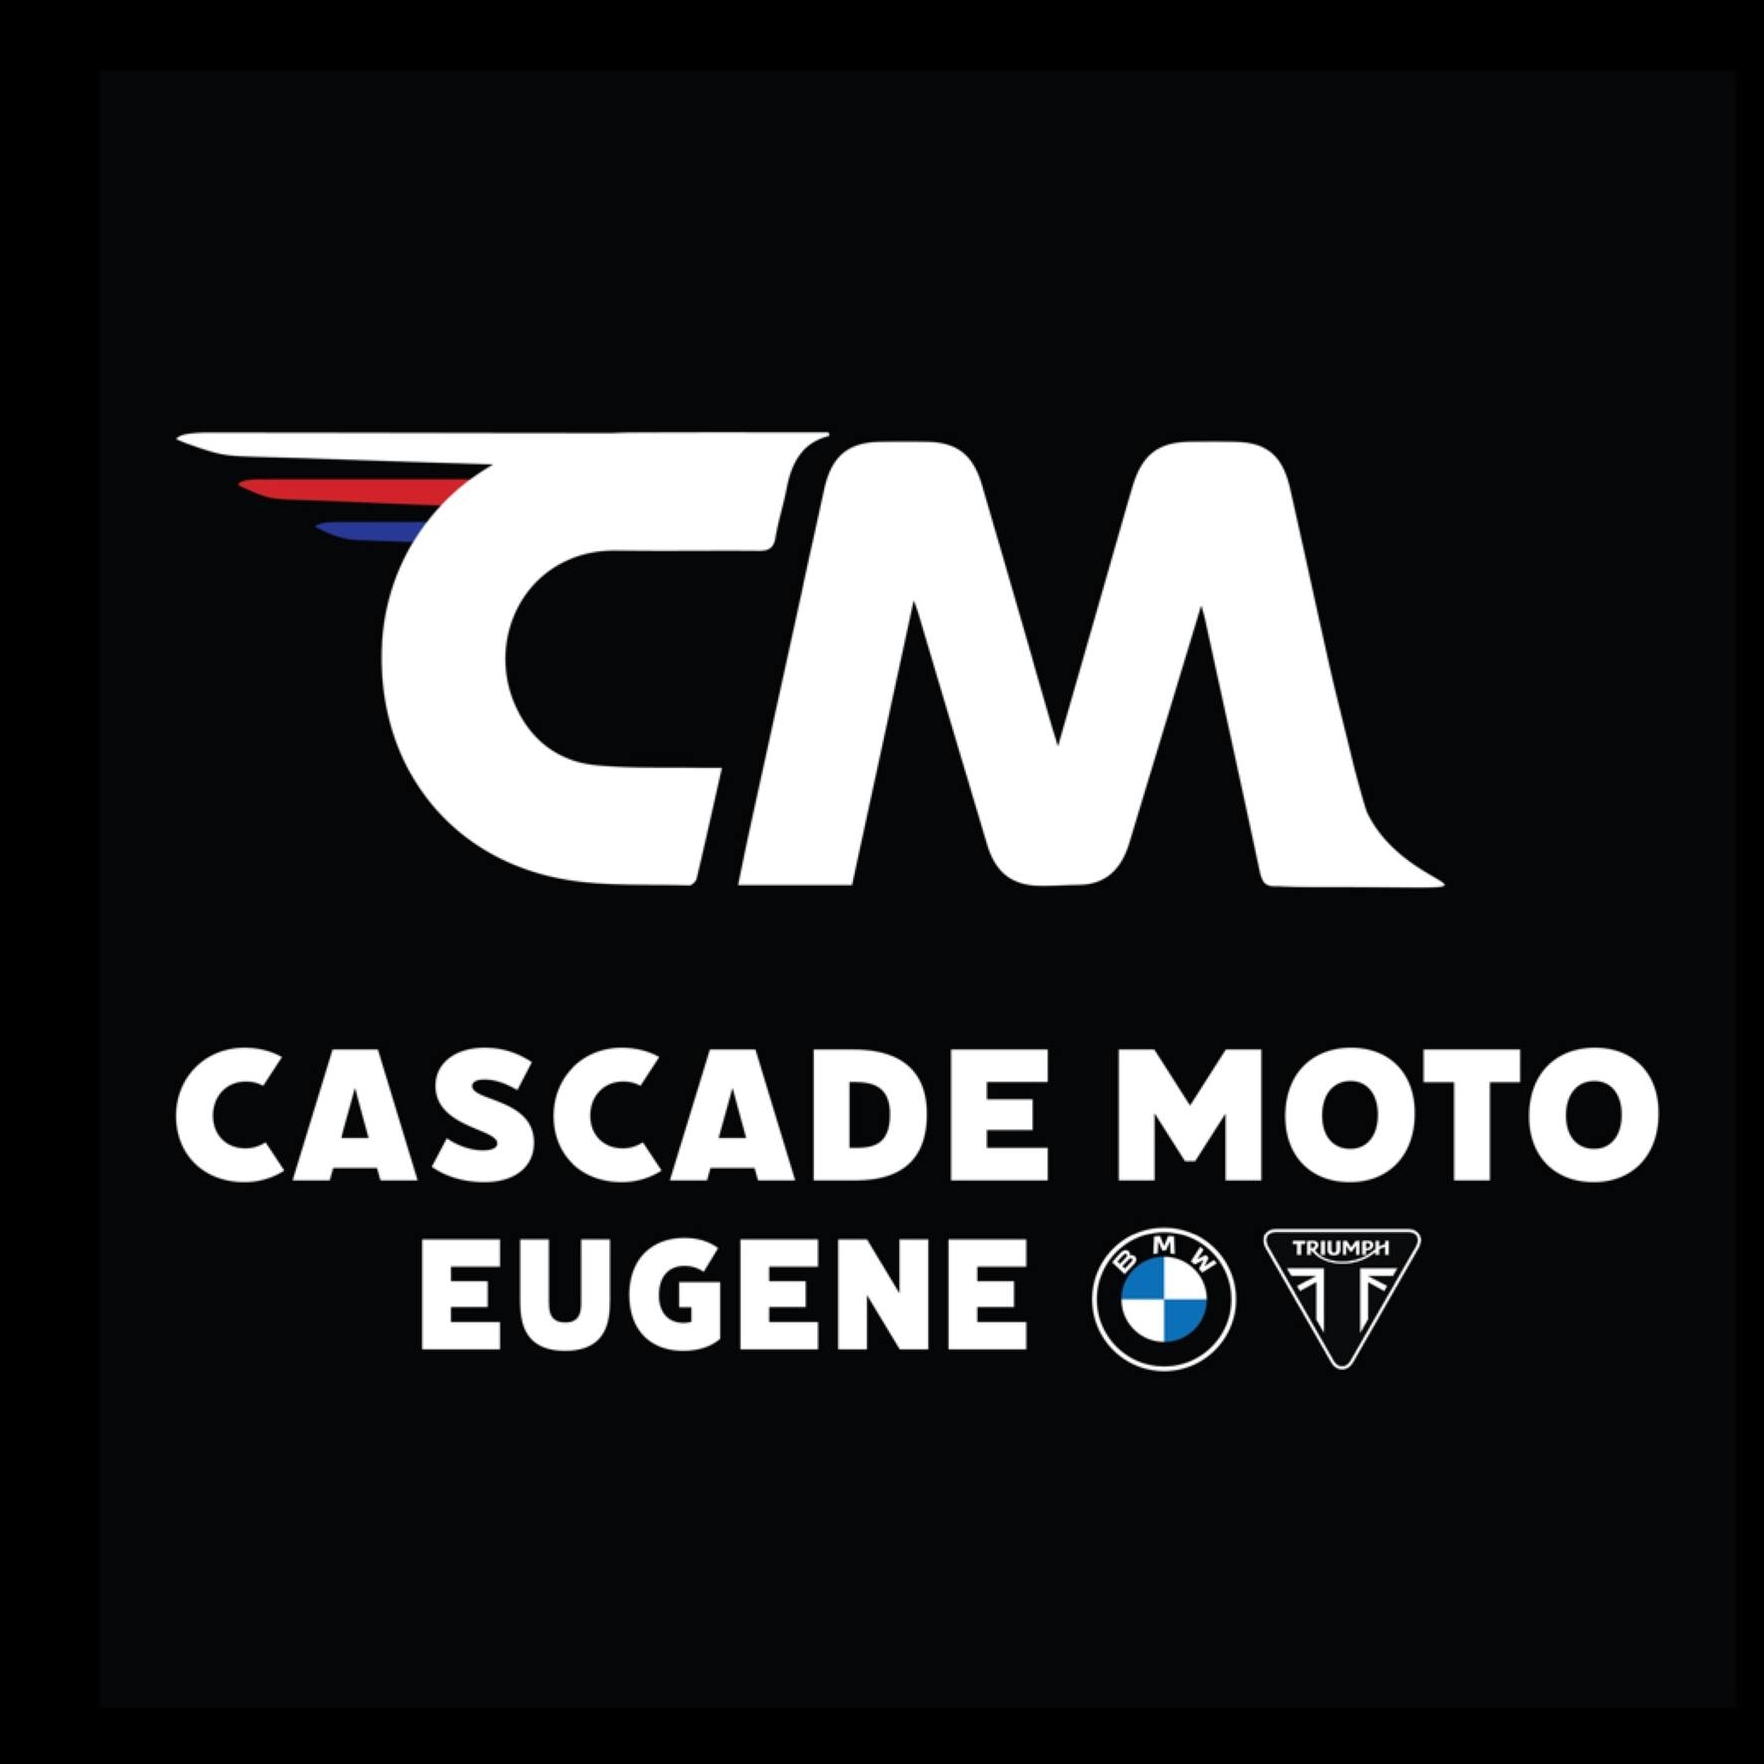 Cascade Moto Eugene logo